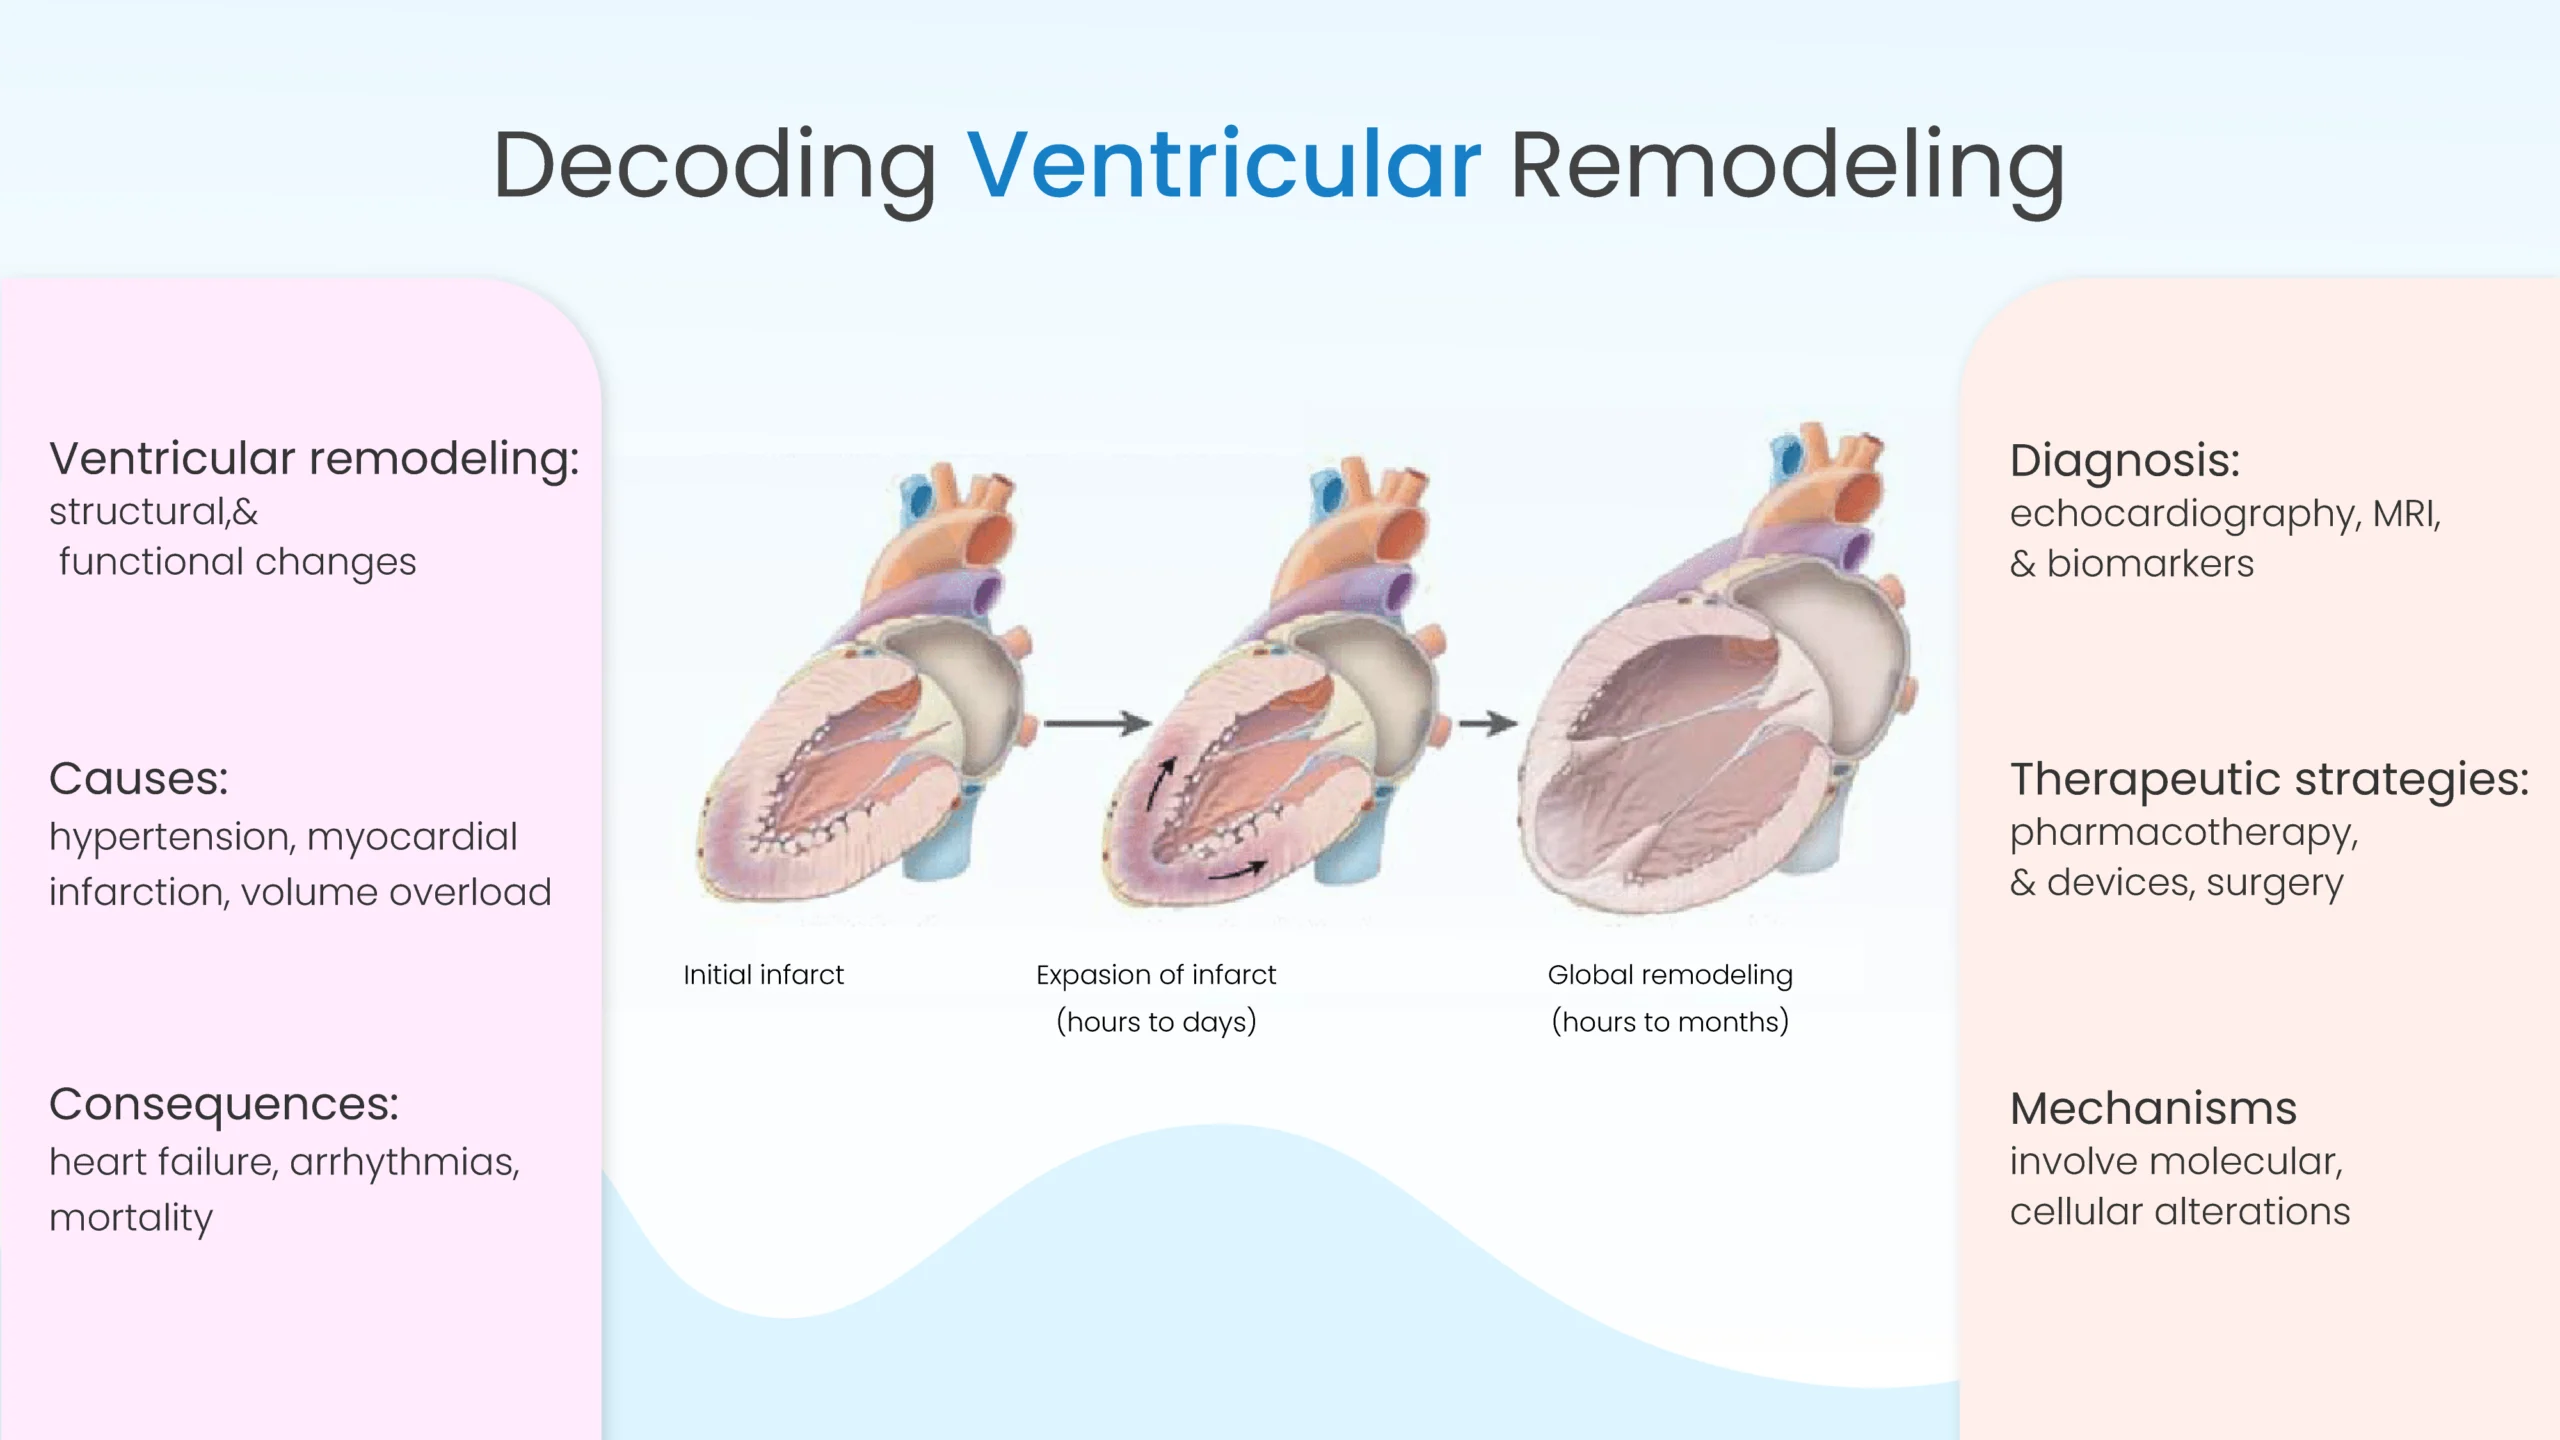 Ventricular remodeling